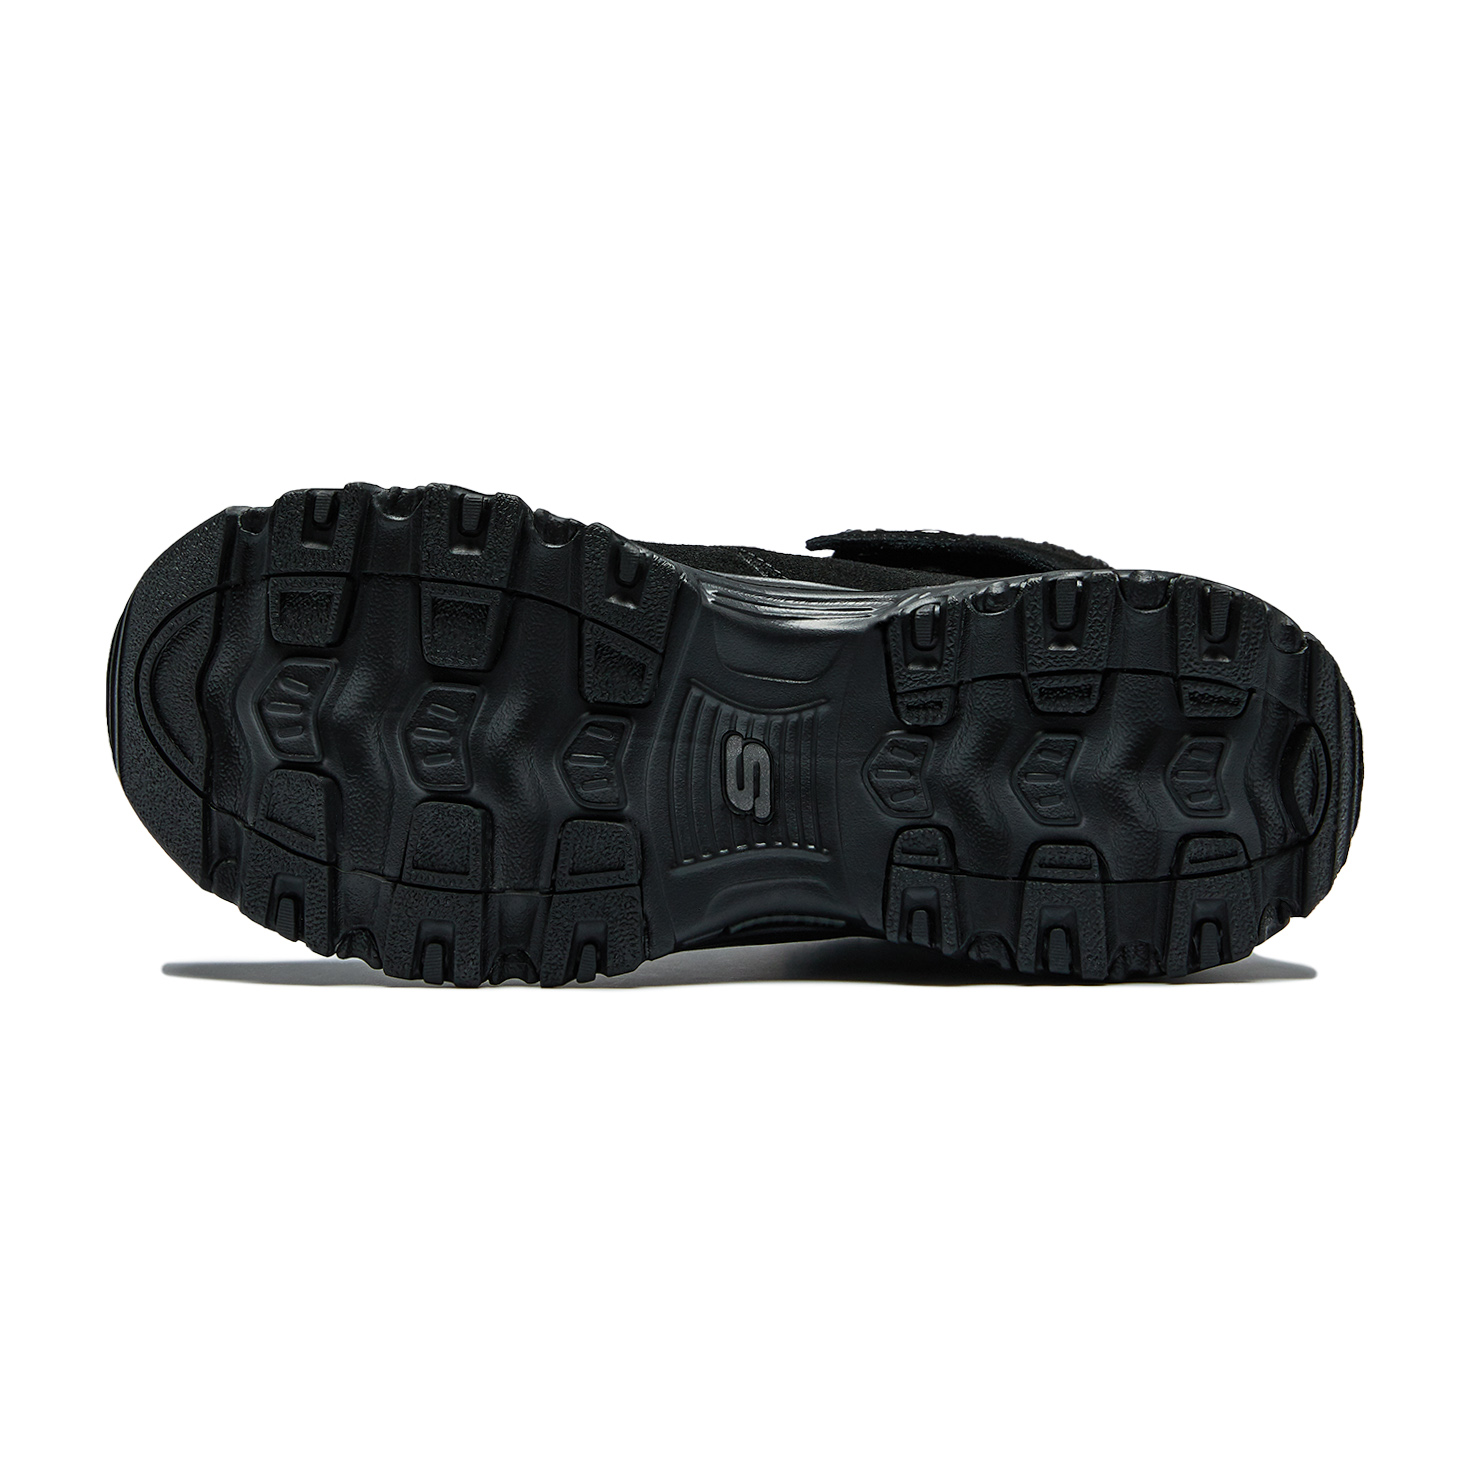 Women's boots SKECHERS, размер 36, цвет черный SK167087 - фото 6